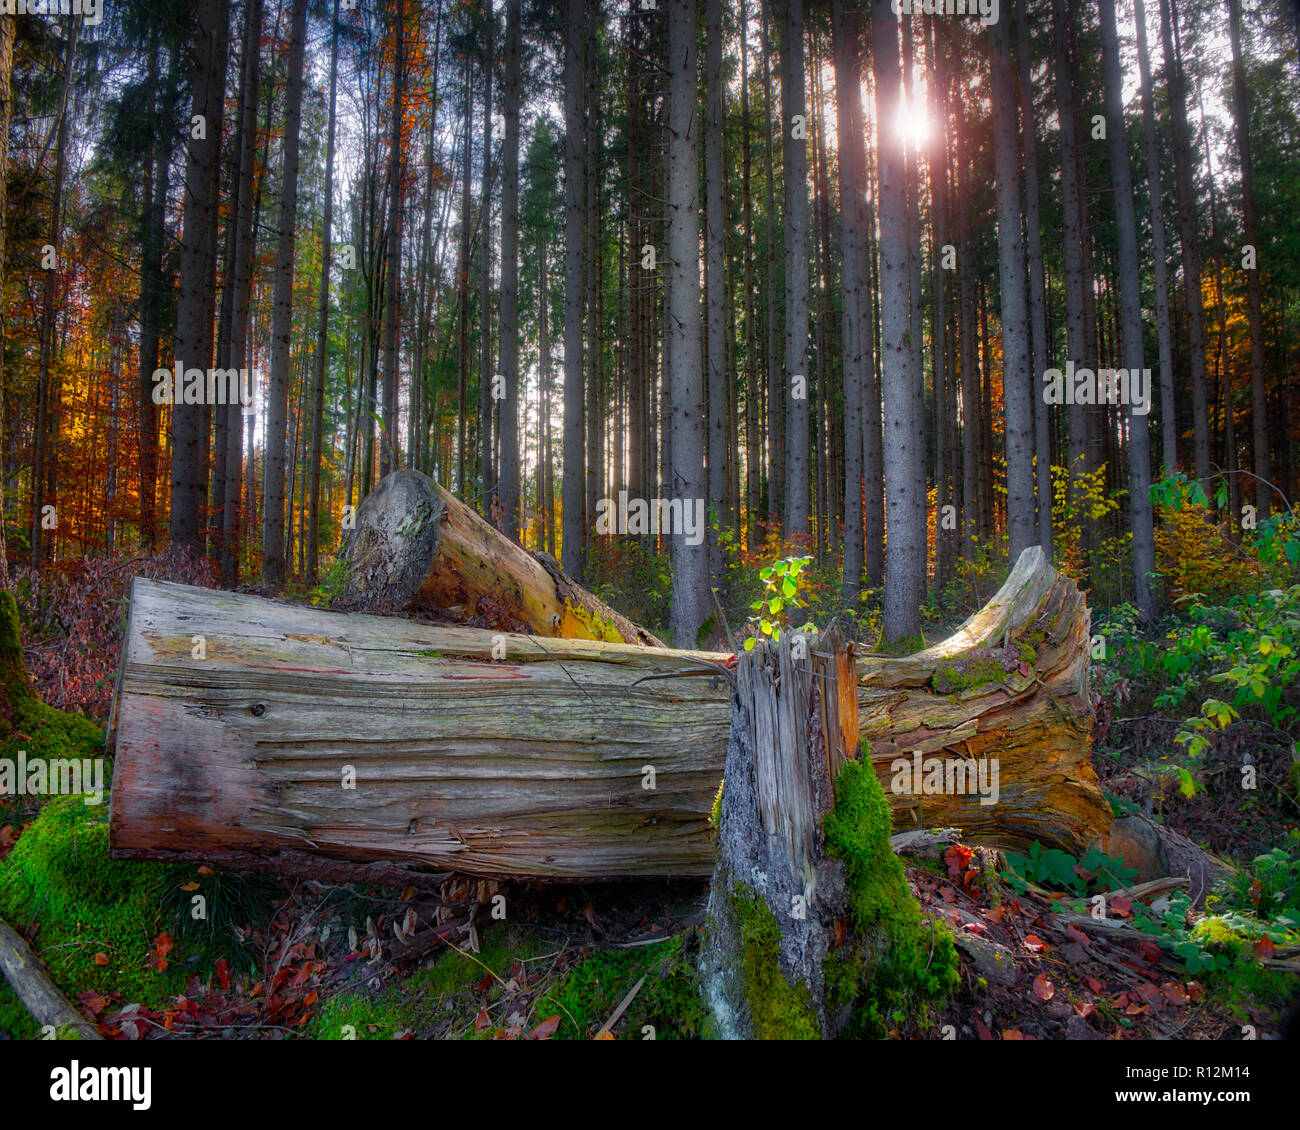 DE - BAVARIA: Autumnal forest near Iffeldorf  (HDR-Image) Stock Photo